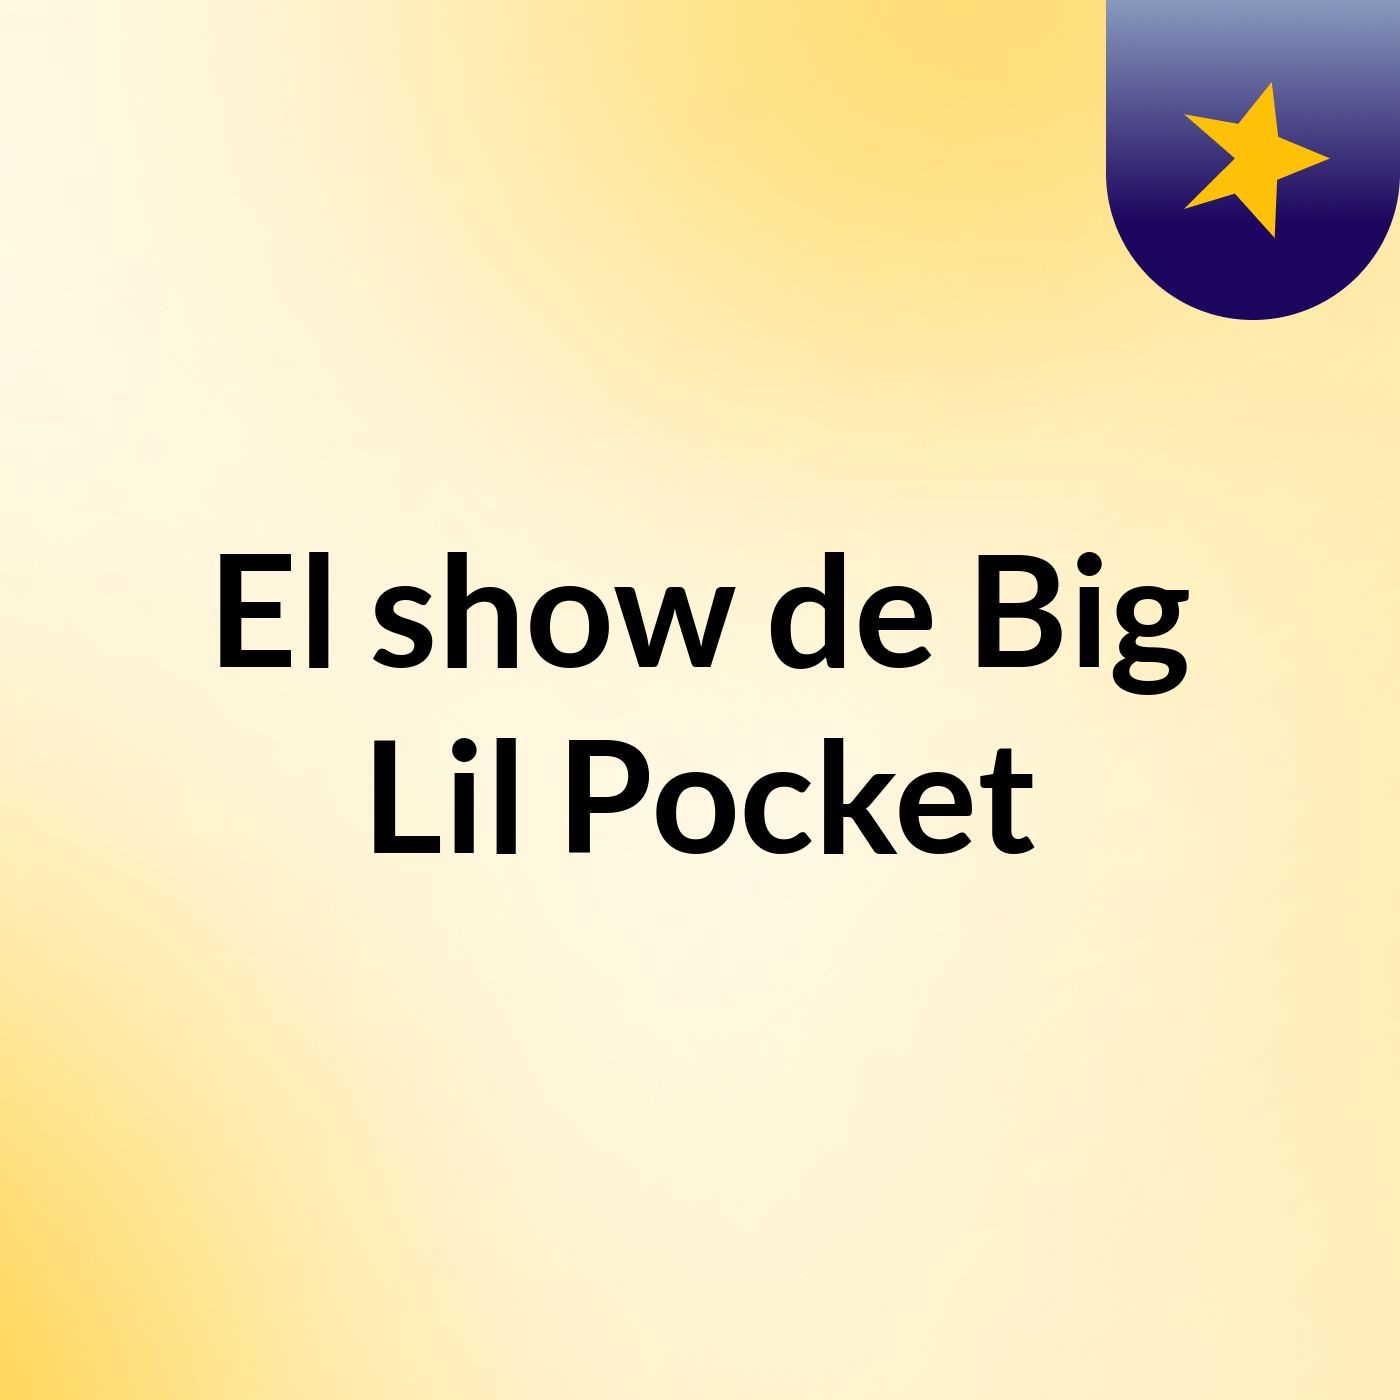 Episodio 4 - El show de Big Lil Pocket